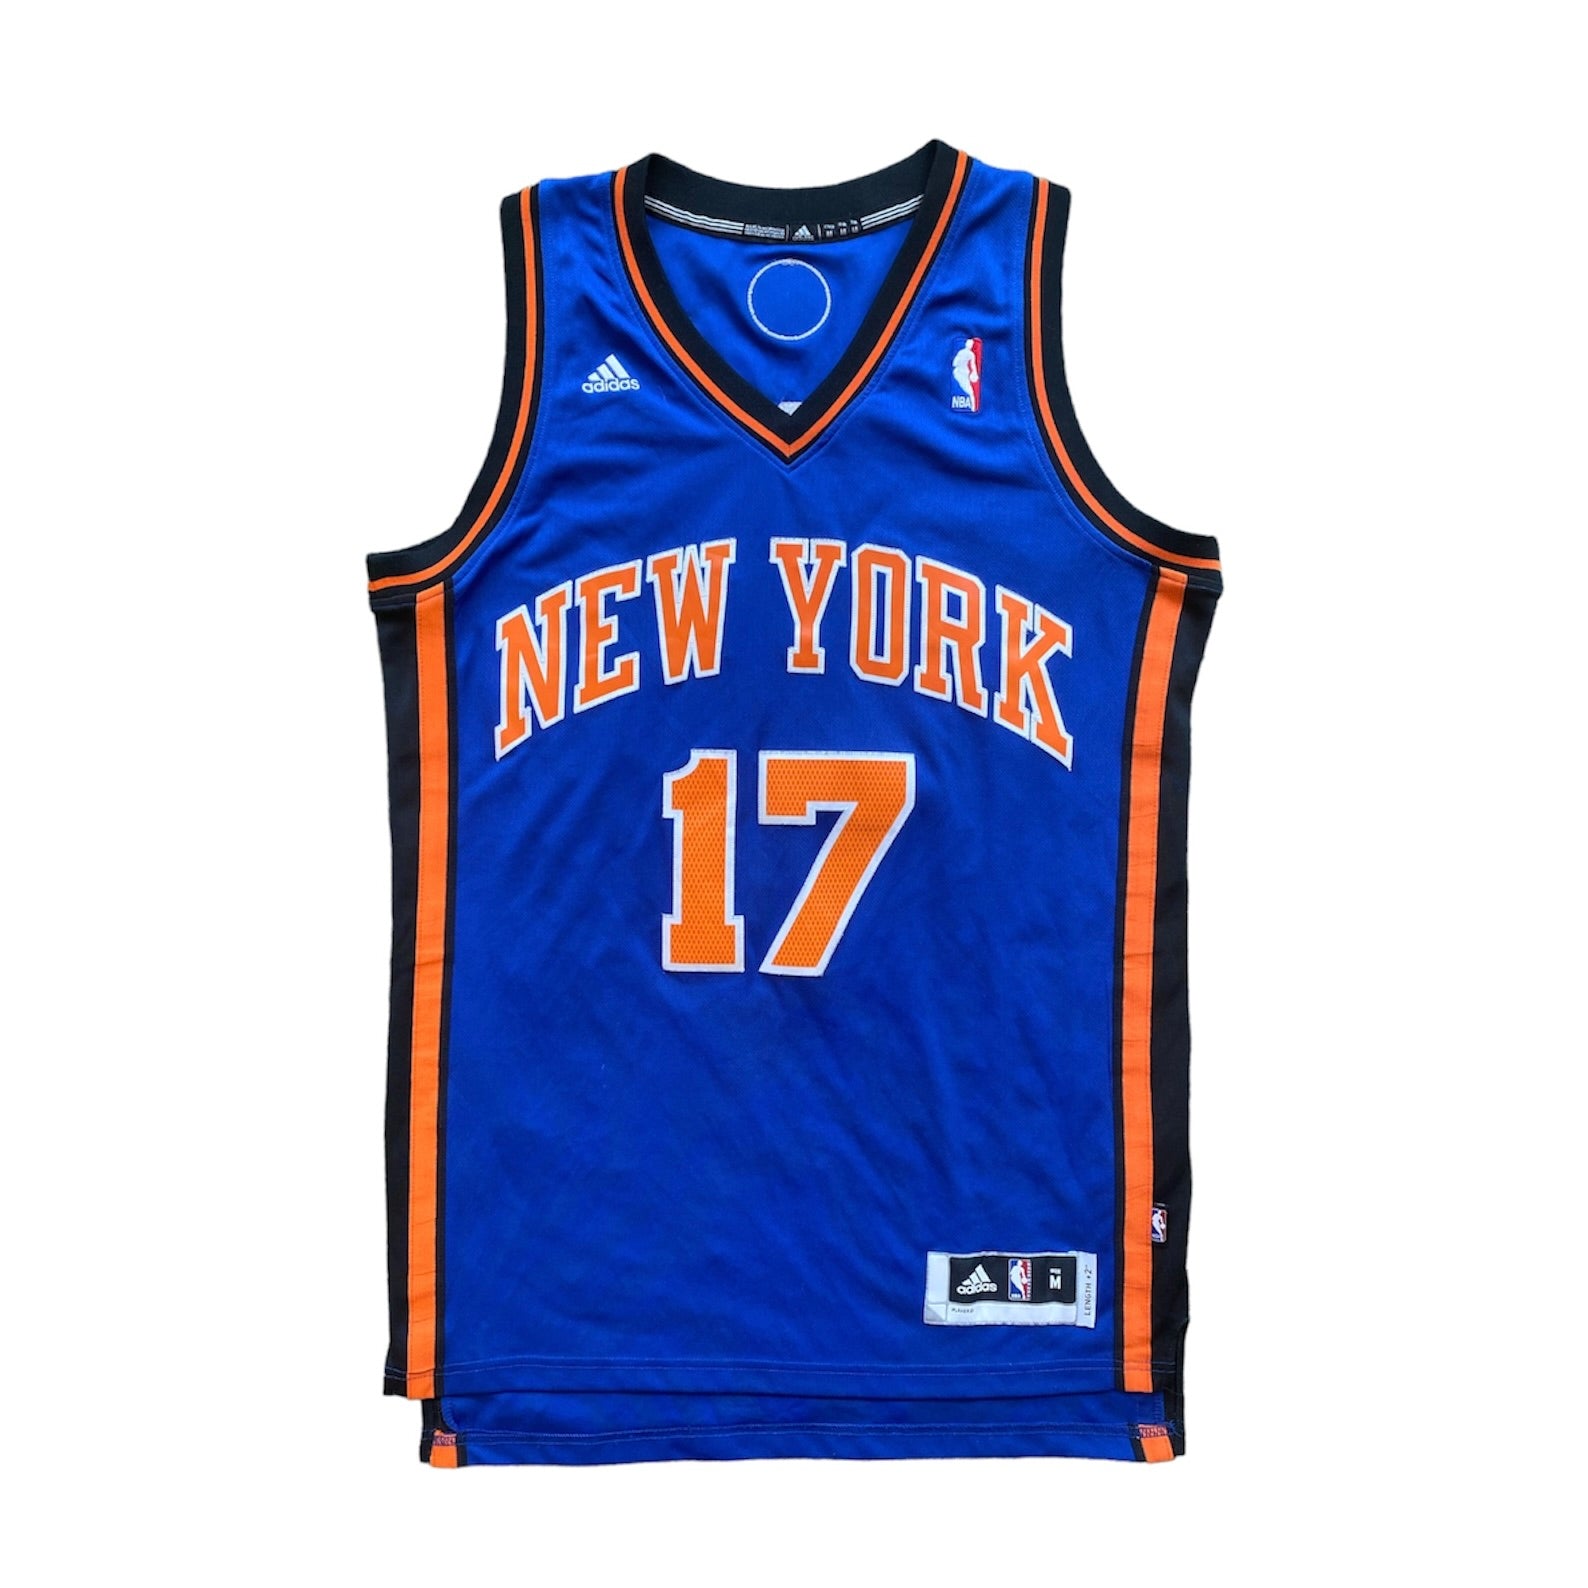 Adidas New York Knicks Jeremy Lin Basketball Jersey